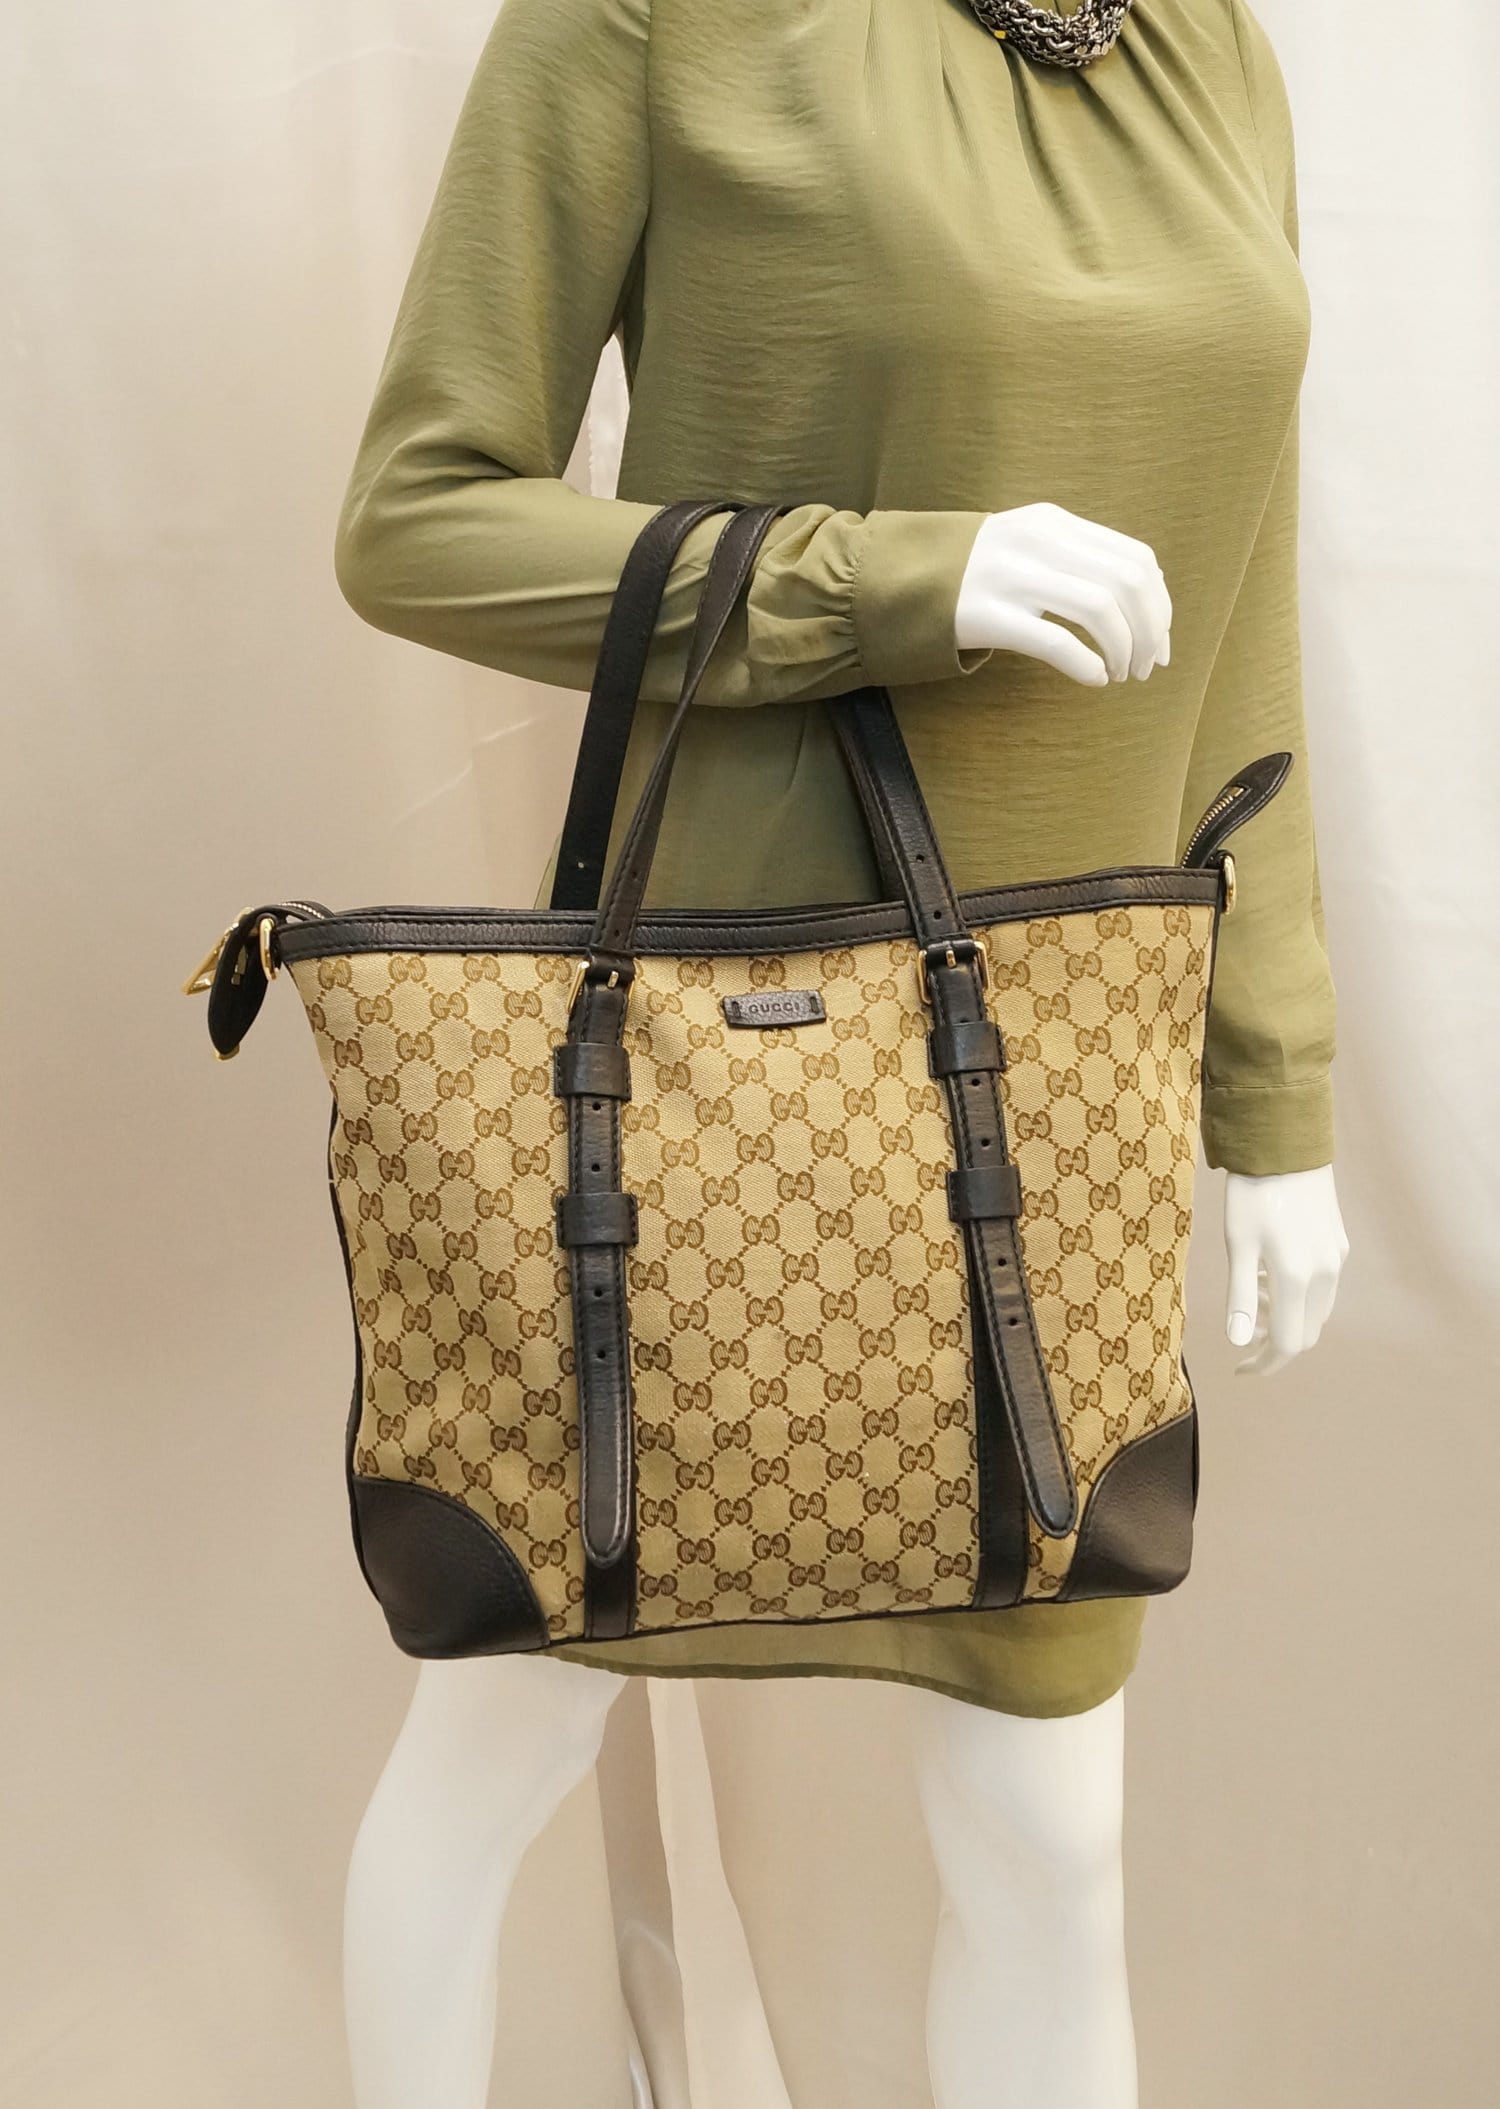 Authentic Gucci GG Canvas Shoulder Bag Brown Gucci Handbag 